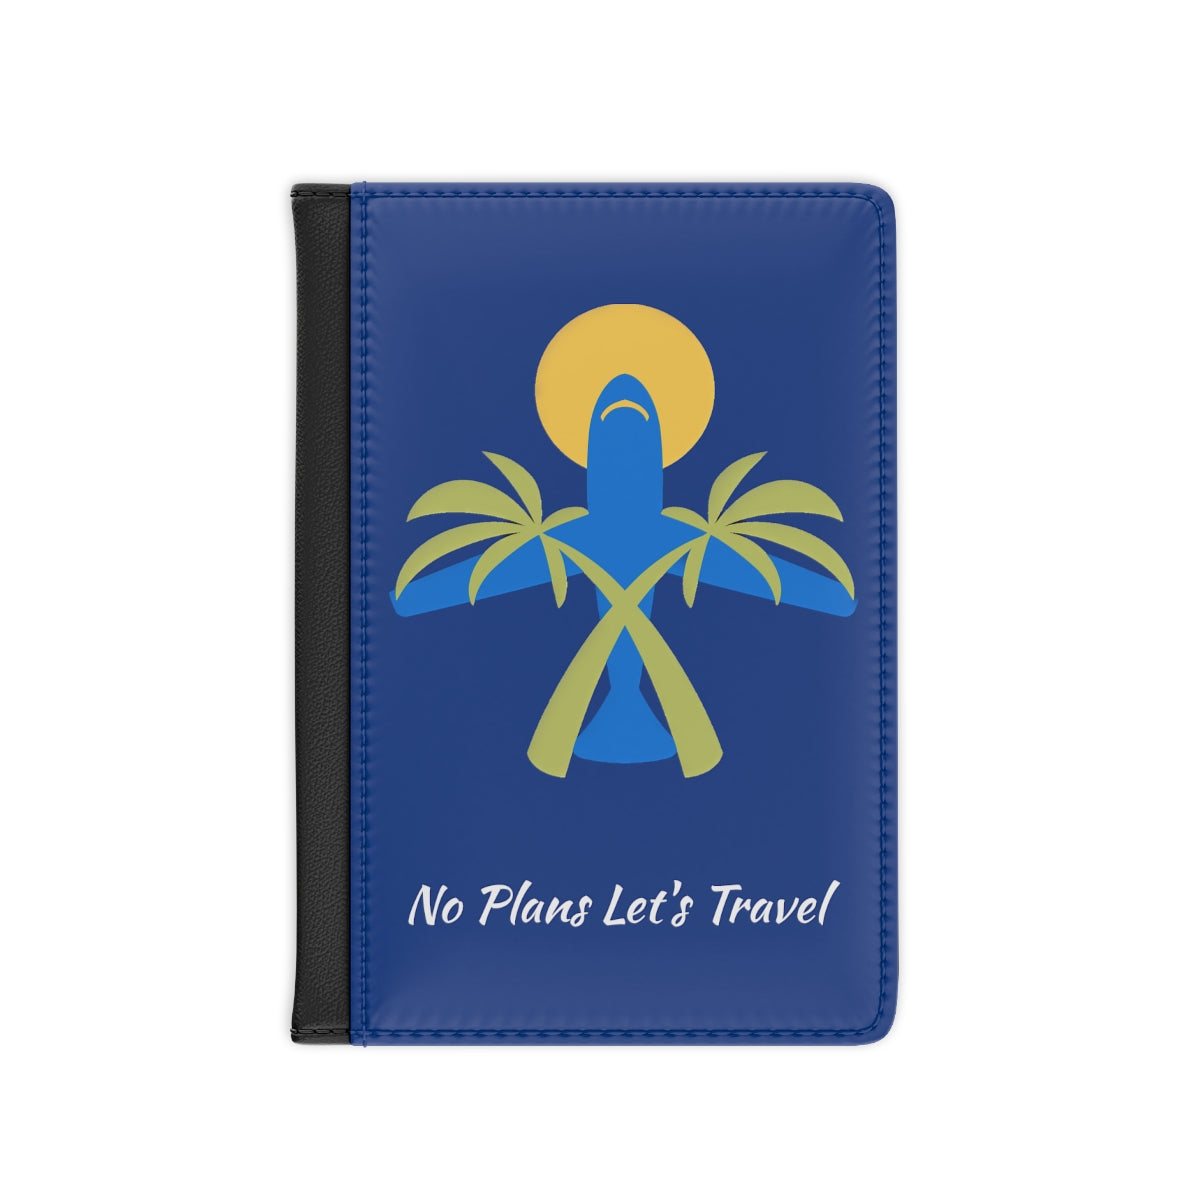 No Plans Let's Travel Passport Cover